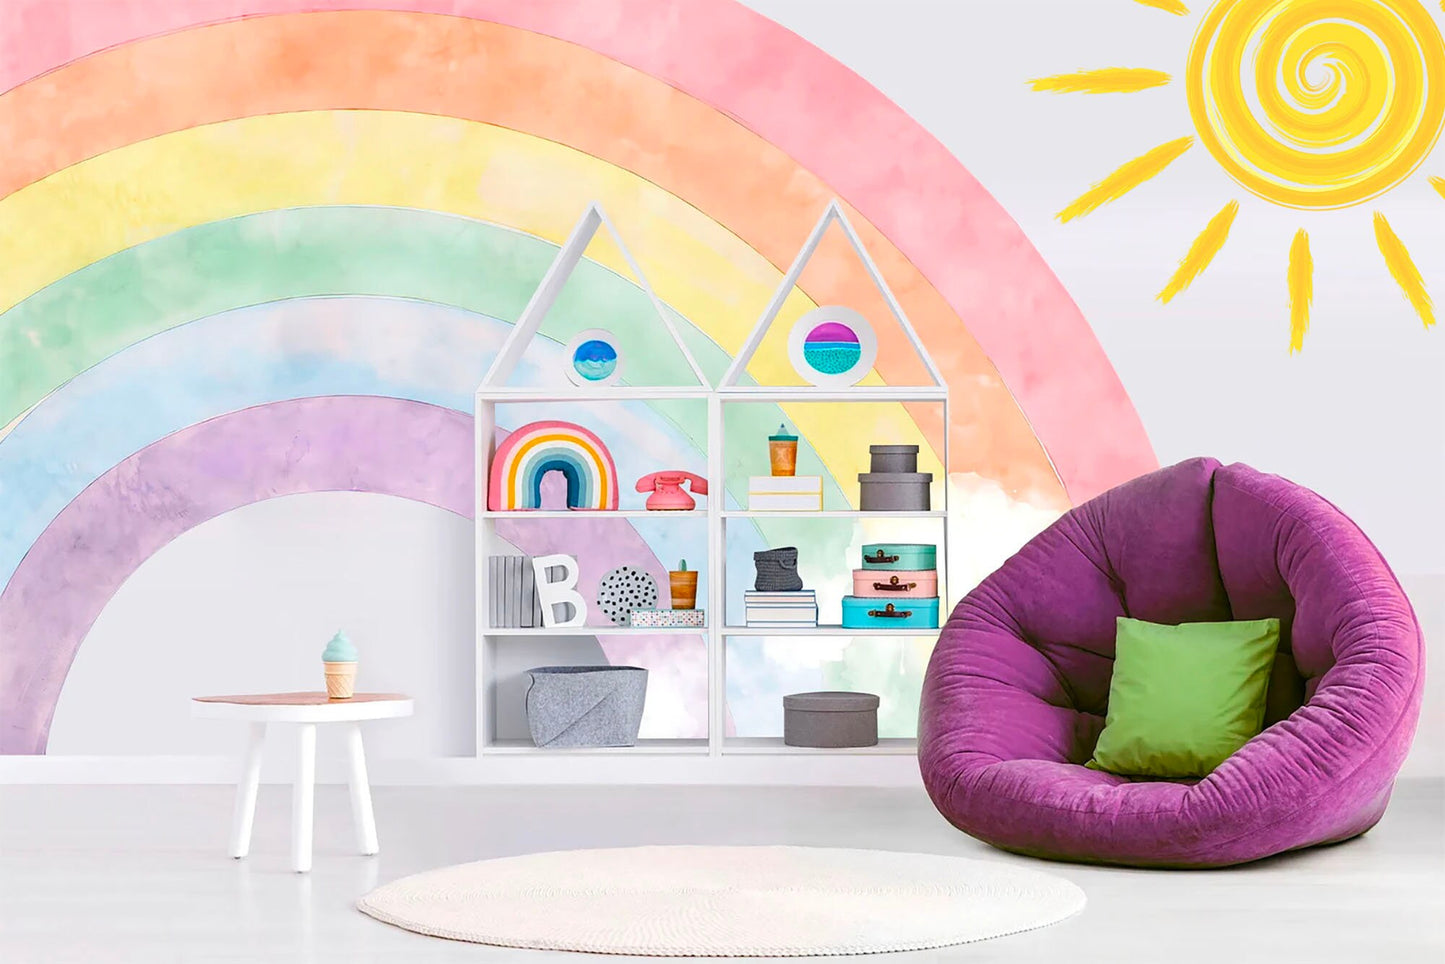 Radiant Rainbow Sun Wall Decal – Watercolor Style Girls' Room Decor - BR192